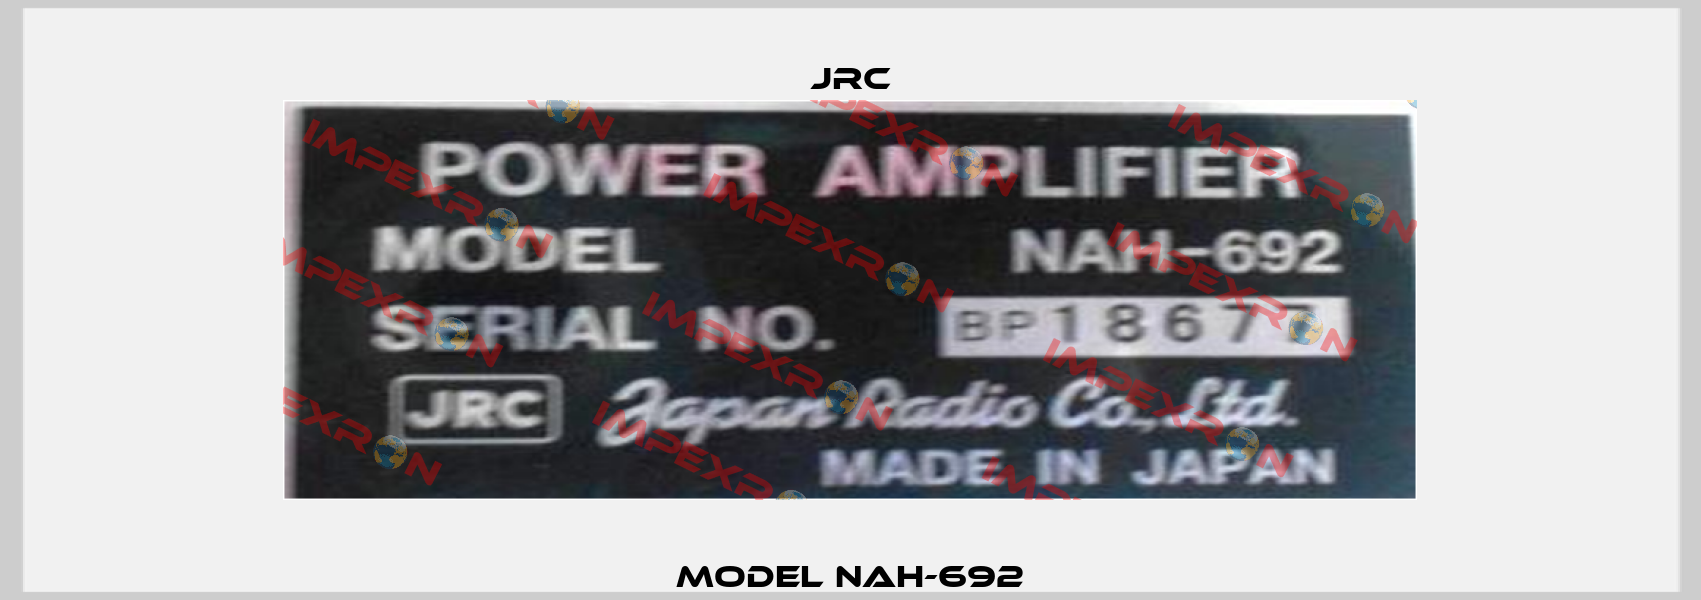 Model NAH-692 Jrc